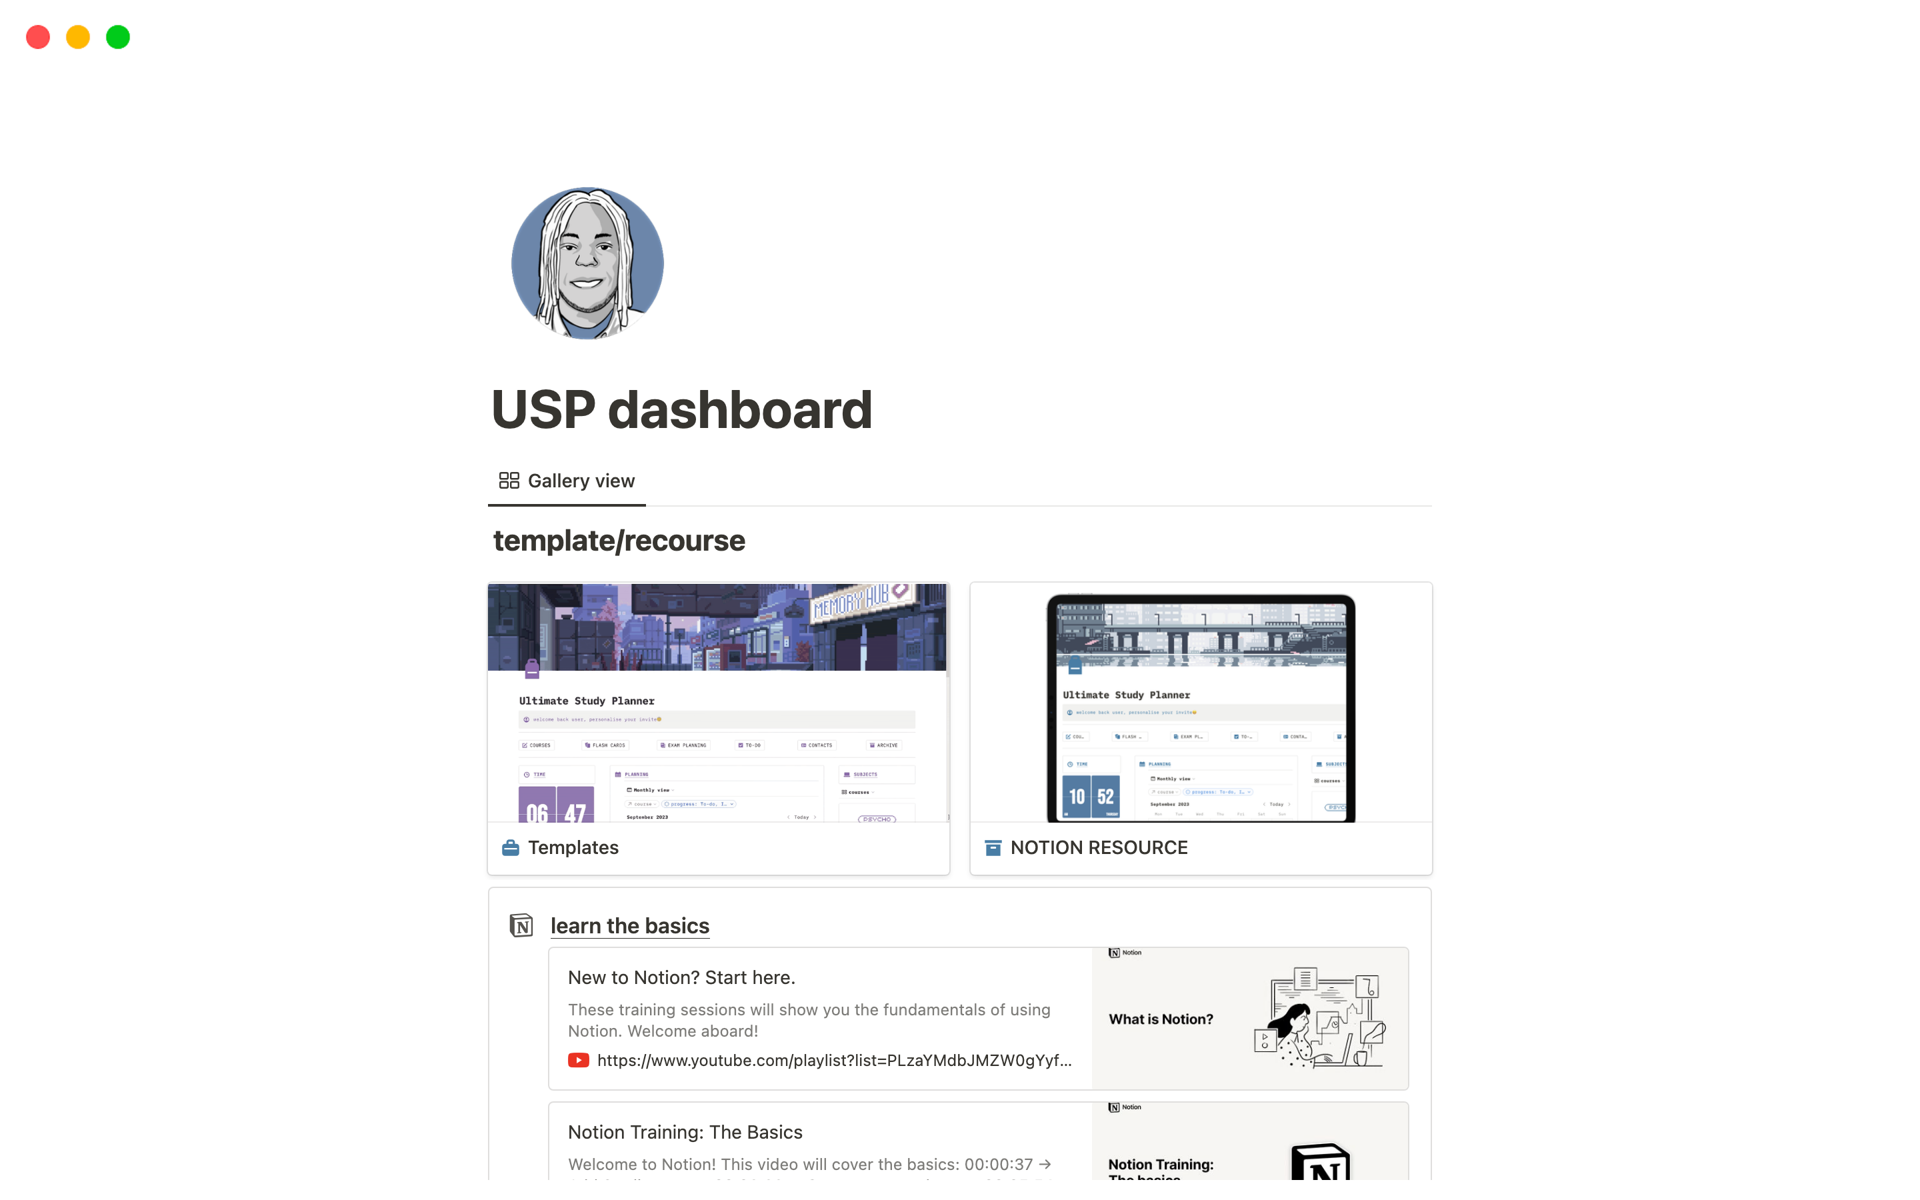 Mallin esikatselu nimelle Ultimate Study Planner | dashboard